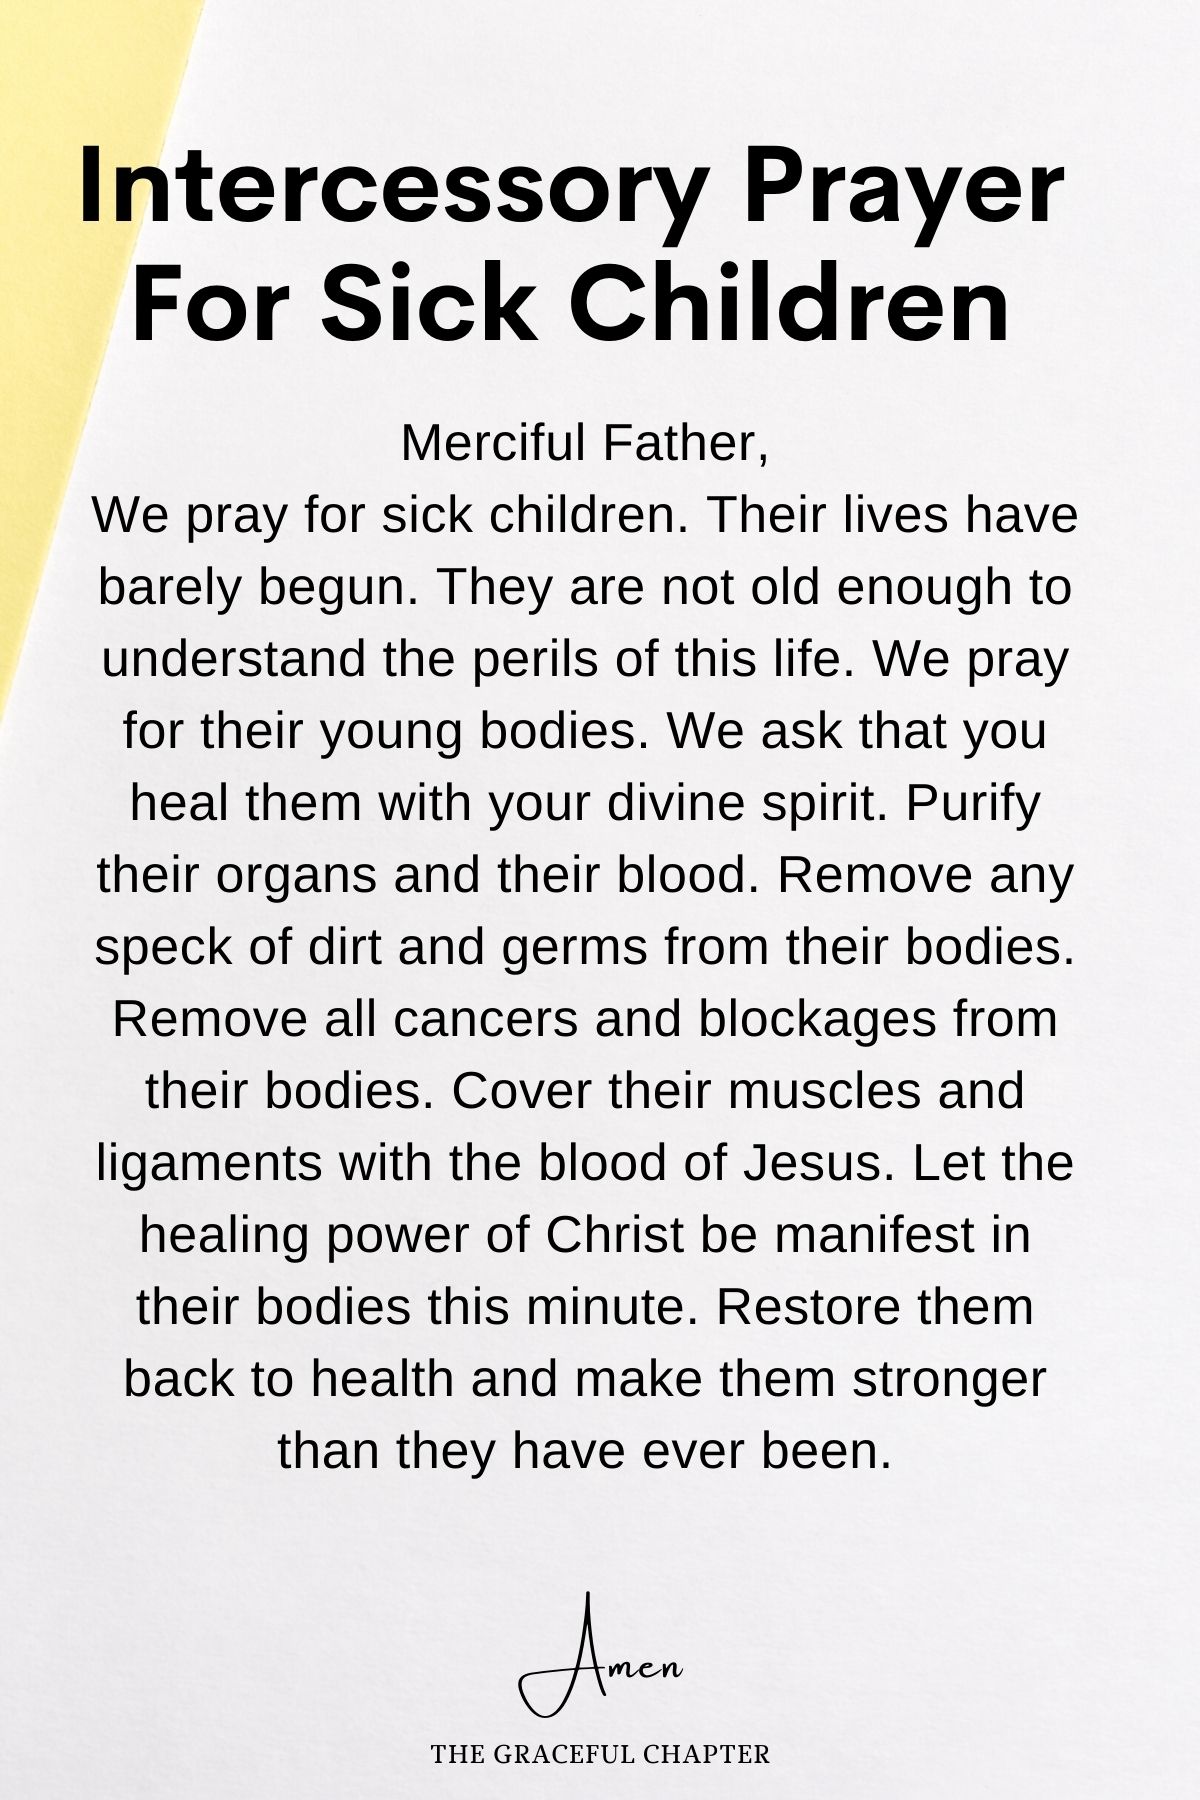 Intercessory prayers for sick children